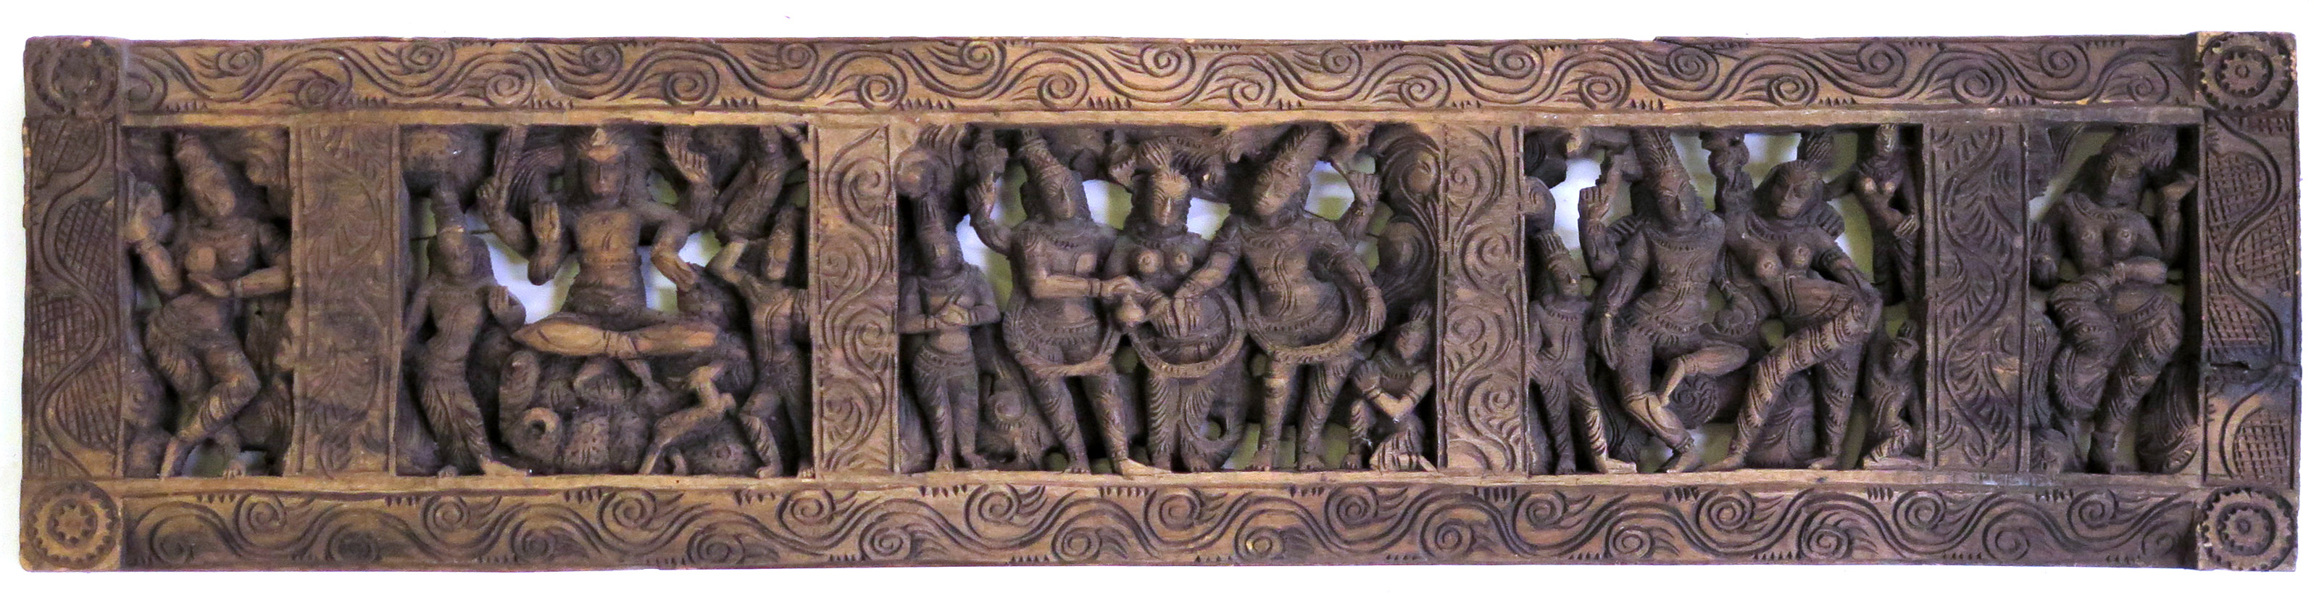 Relief, skuret trä, Indien, 1900-tal, _13095a_lg.jpeg